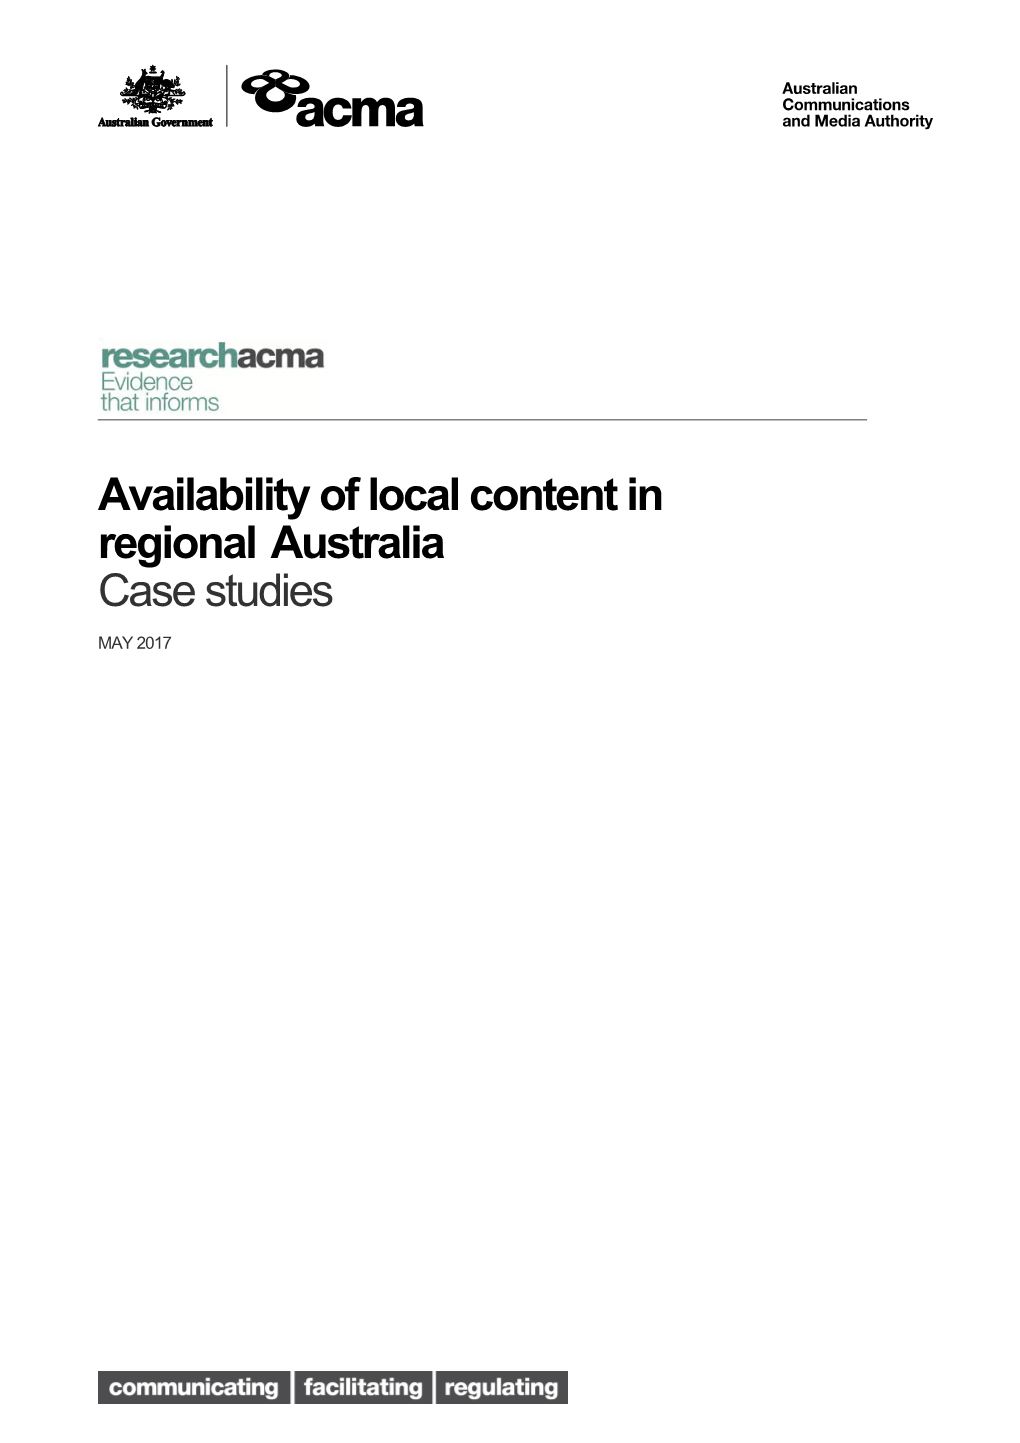 Availability of Local Content in Regionalaustralia